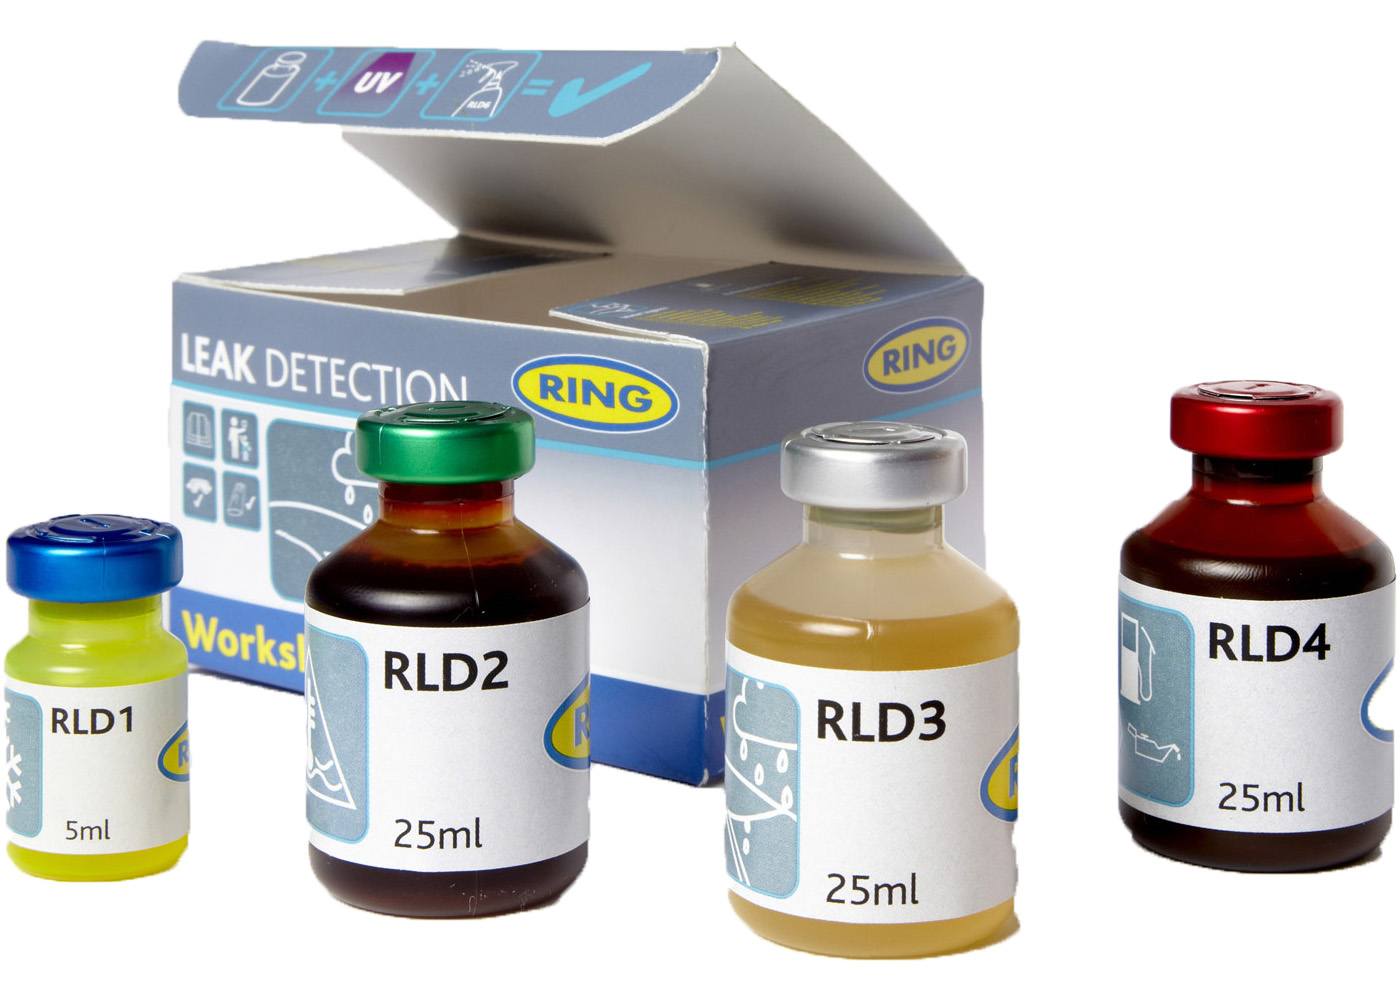 UV Dye & Torch Kit Leak Detection Dye For Oil & Fuel Petrol Diesel Leaks RLD4 